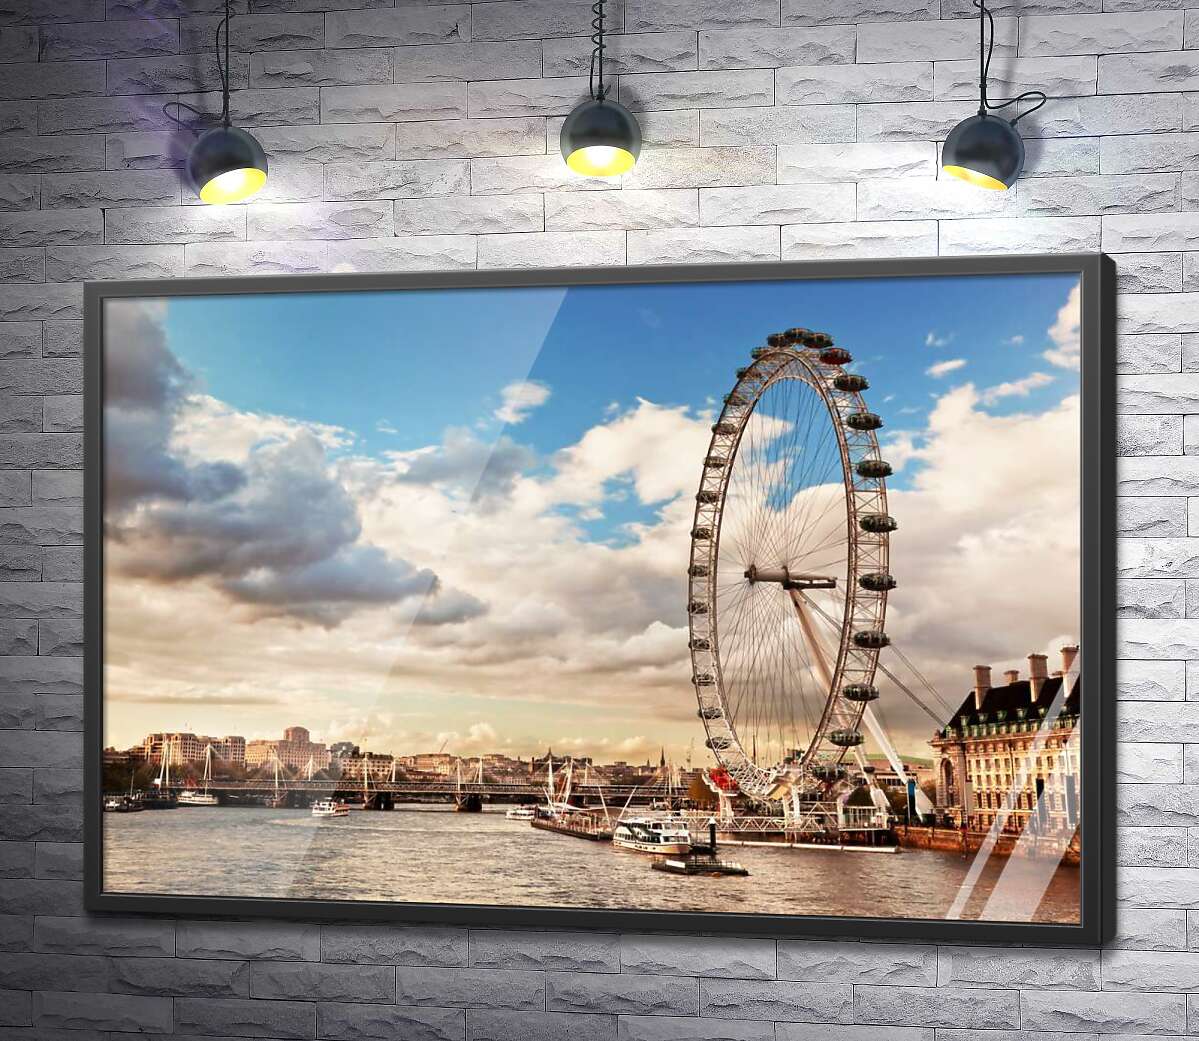 постер Колесо огляду "Лондонське око" (London eye) нависло над водами Темзи